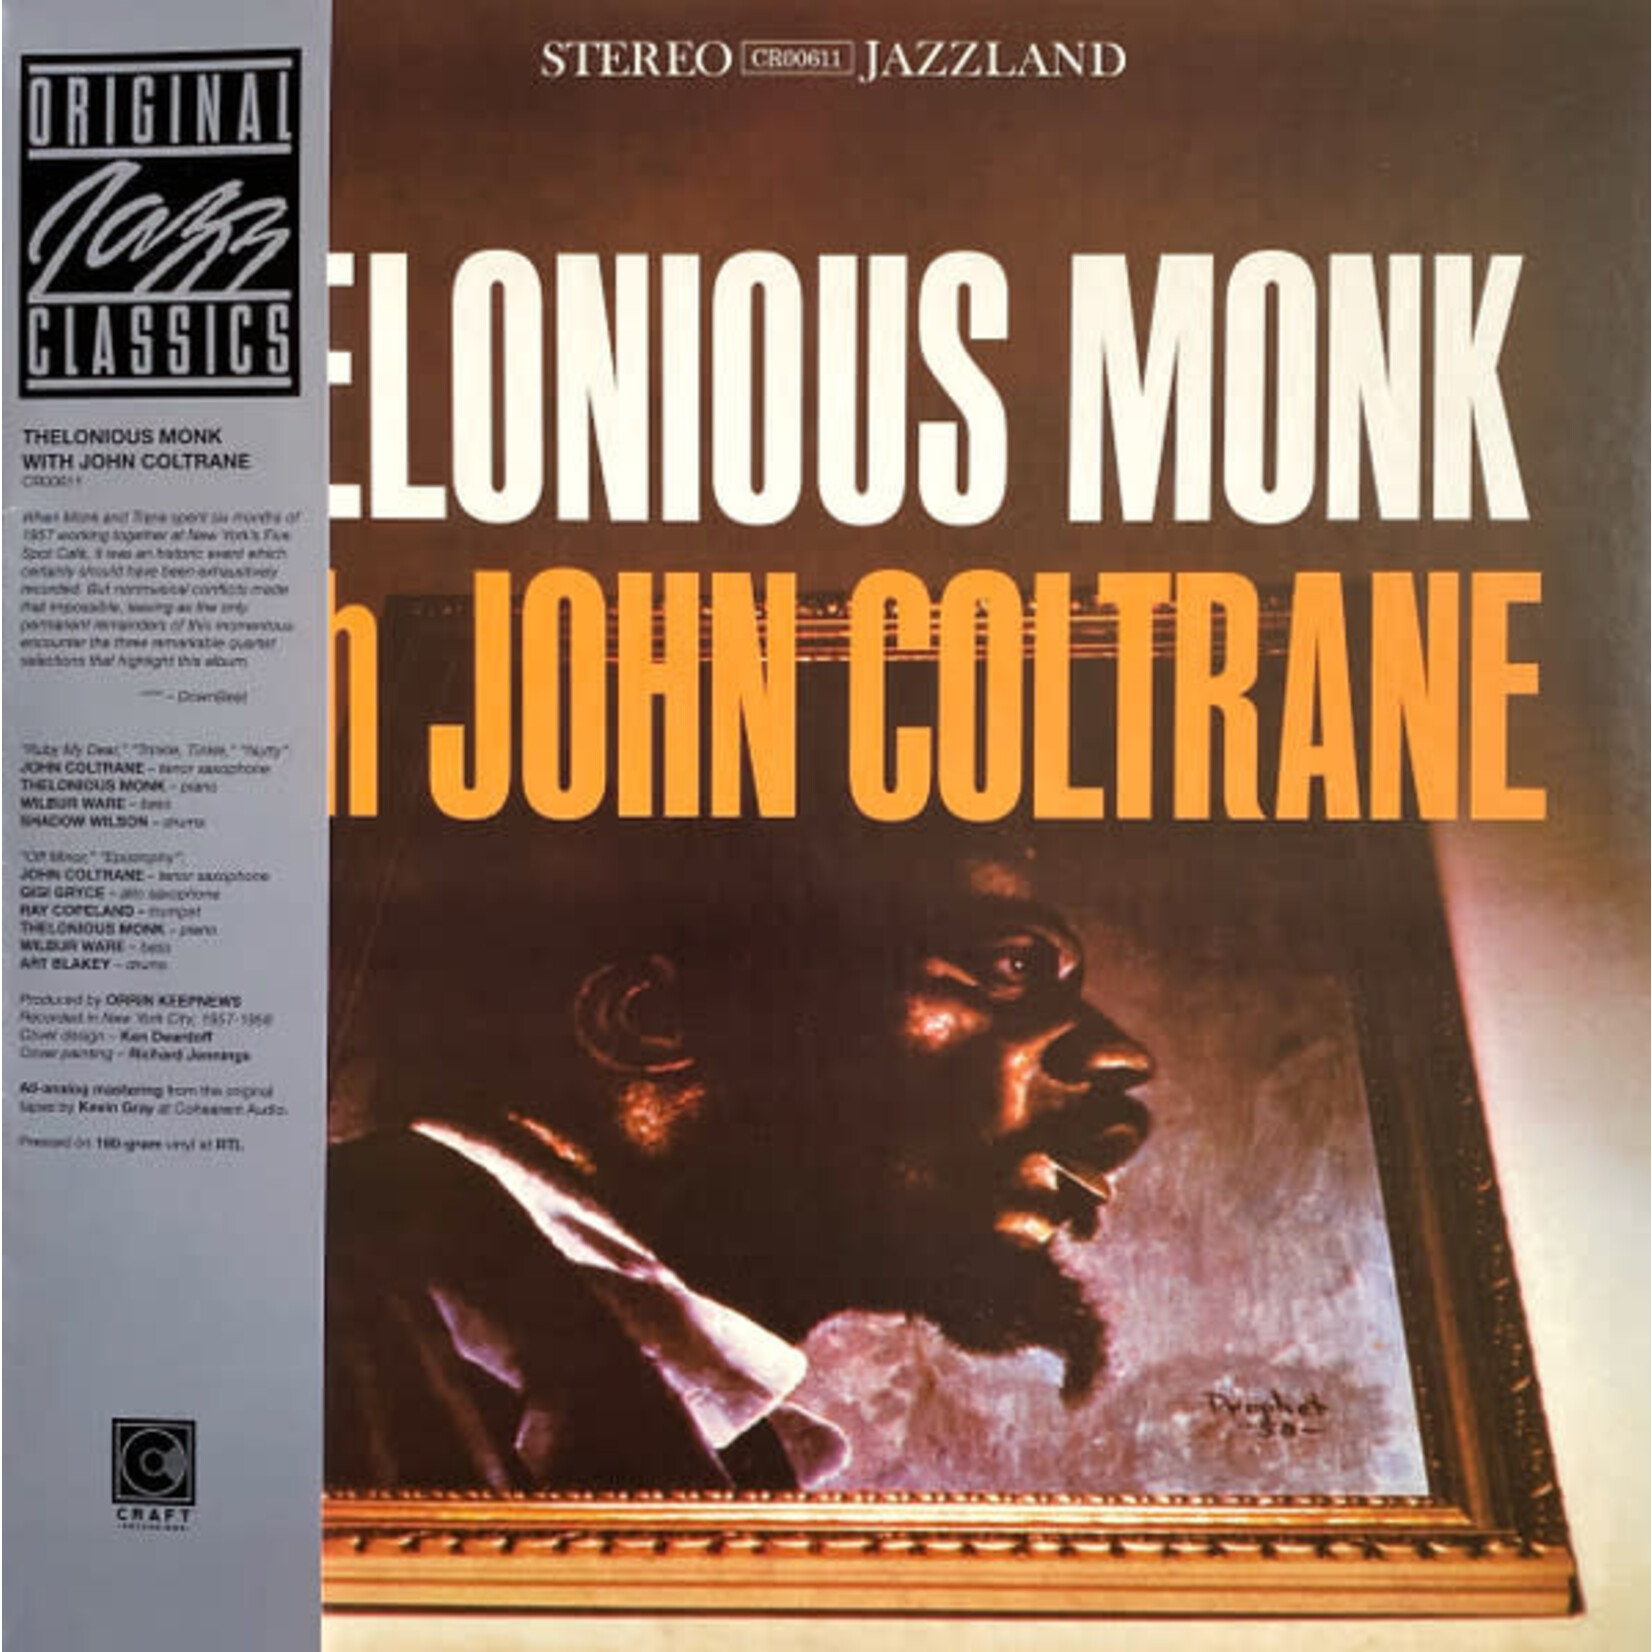 [New] Thelonious Monk & John Coltrane - Thelonious Monk With John Coltrane (Original Jazz Classics series)